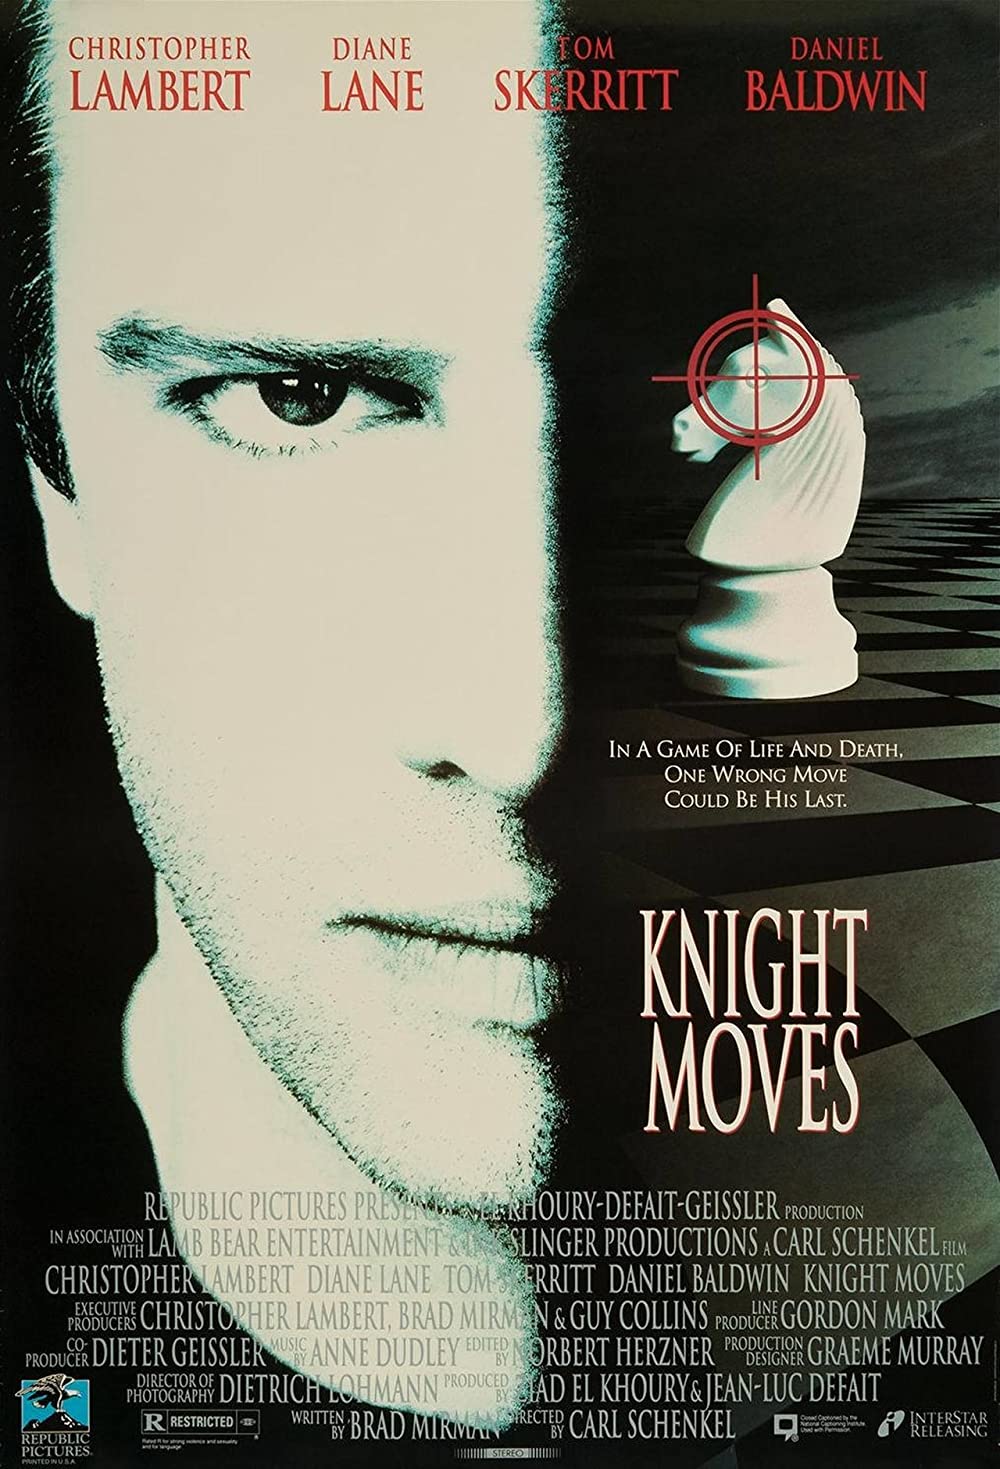 Filmbeschreibung zu Knight Moves